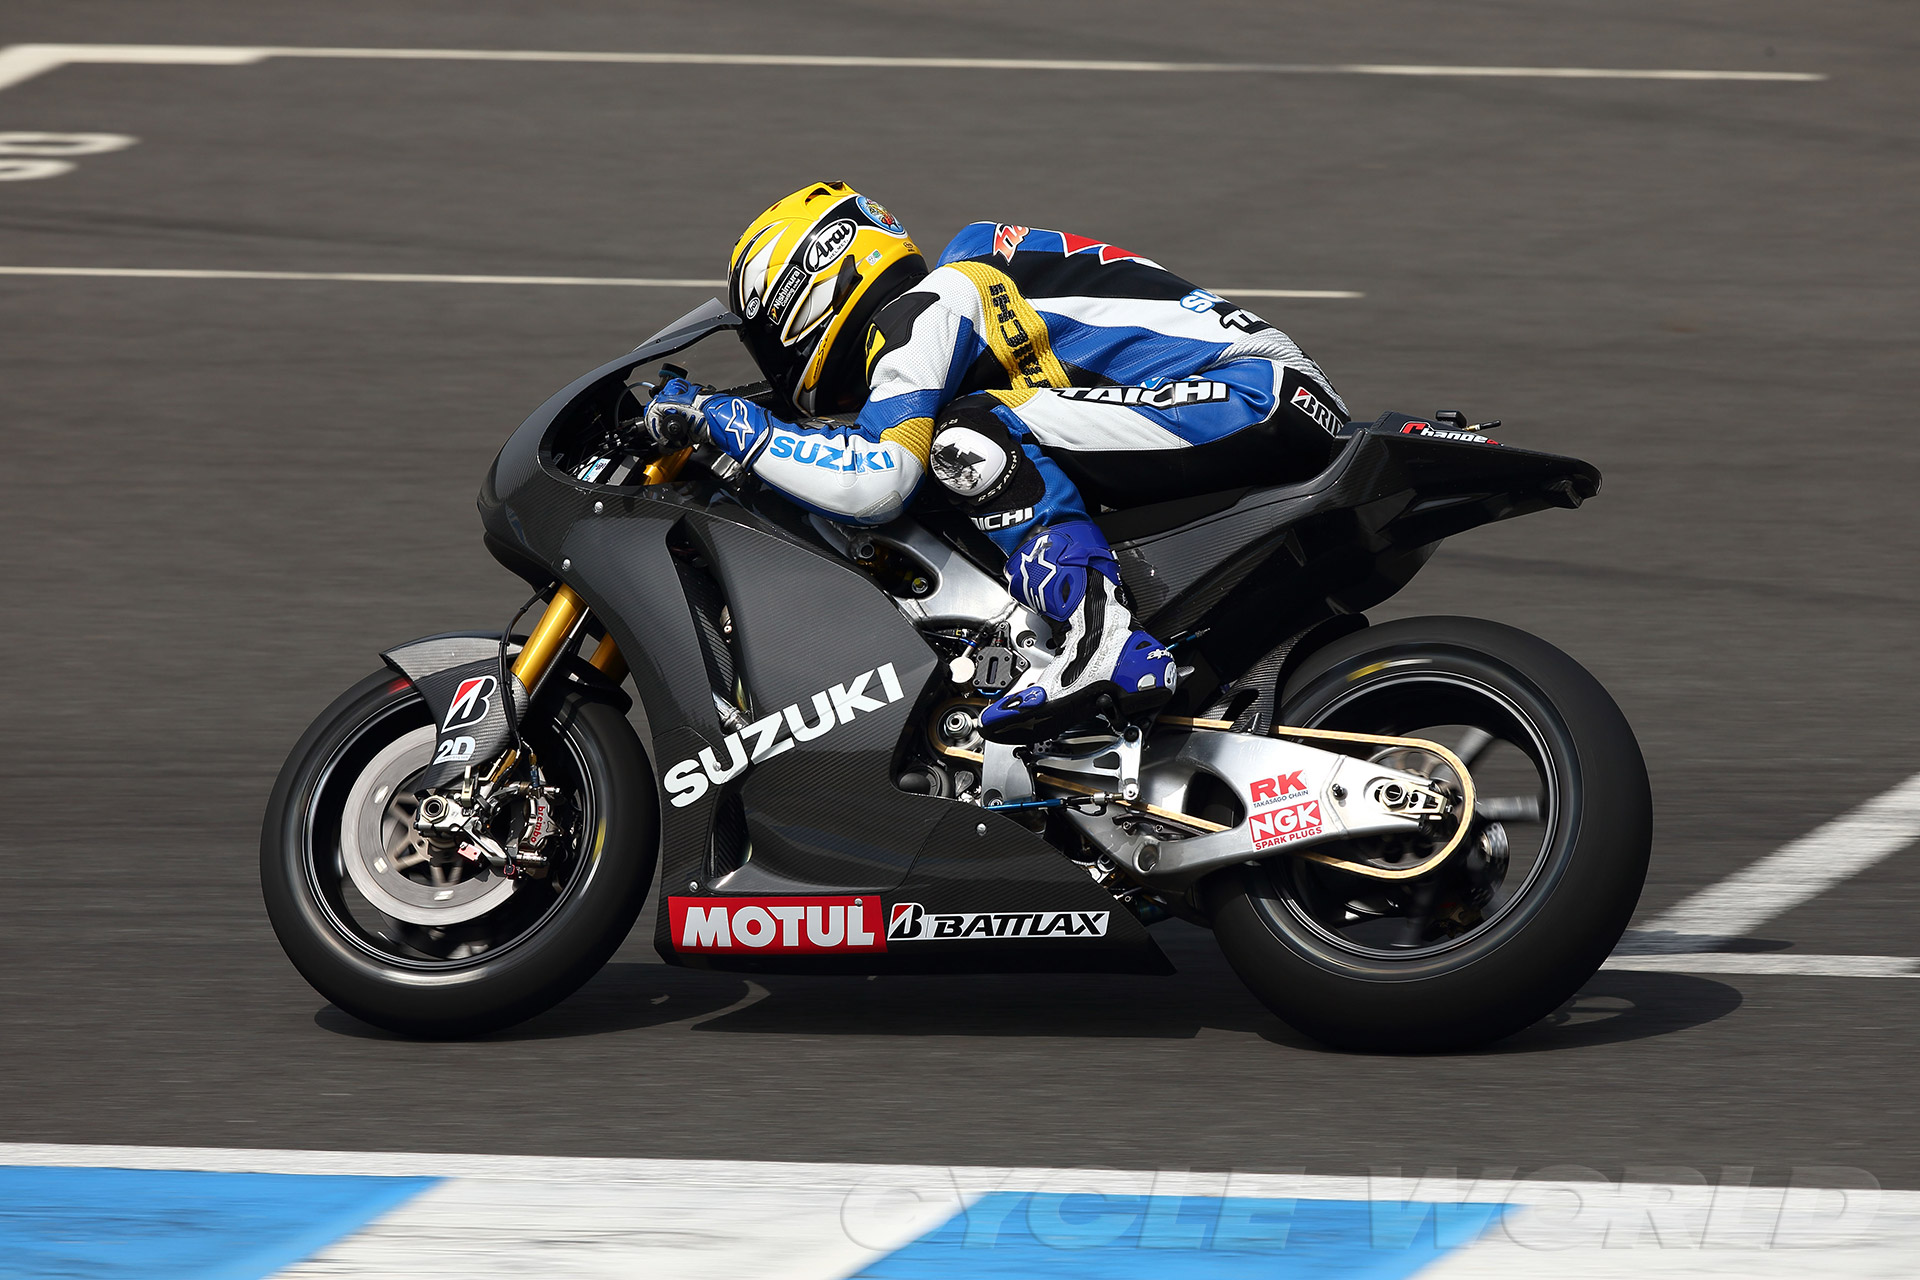  Suzuki MotoGP HD Wallpaper image and save image as click save